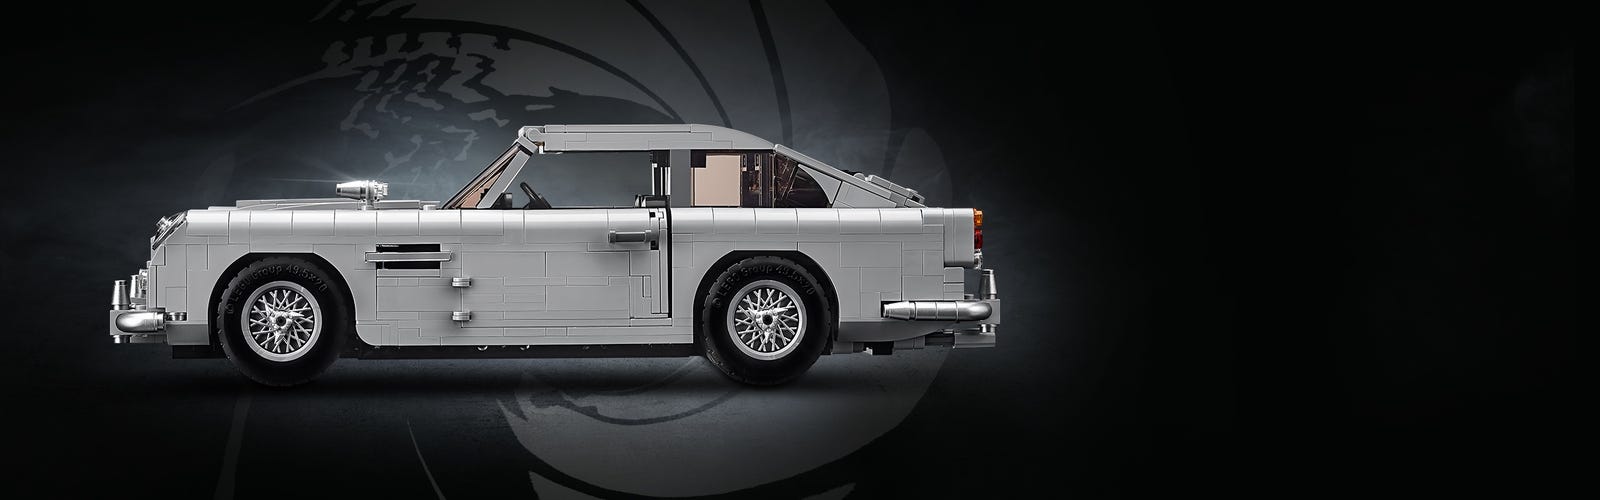 James Bond™ Aston Martin DB5 10262 | Creator Expert | Buy online at the  Official LEGO® Shop US